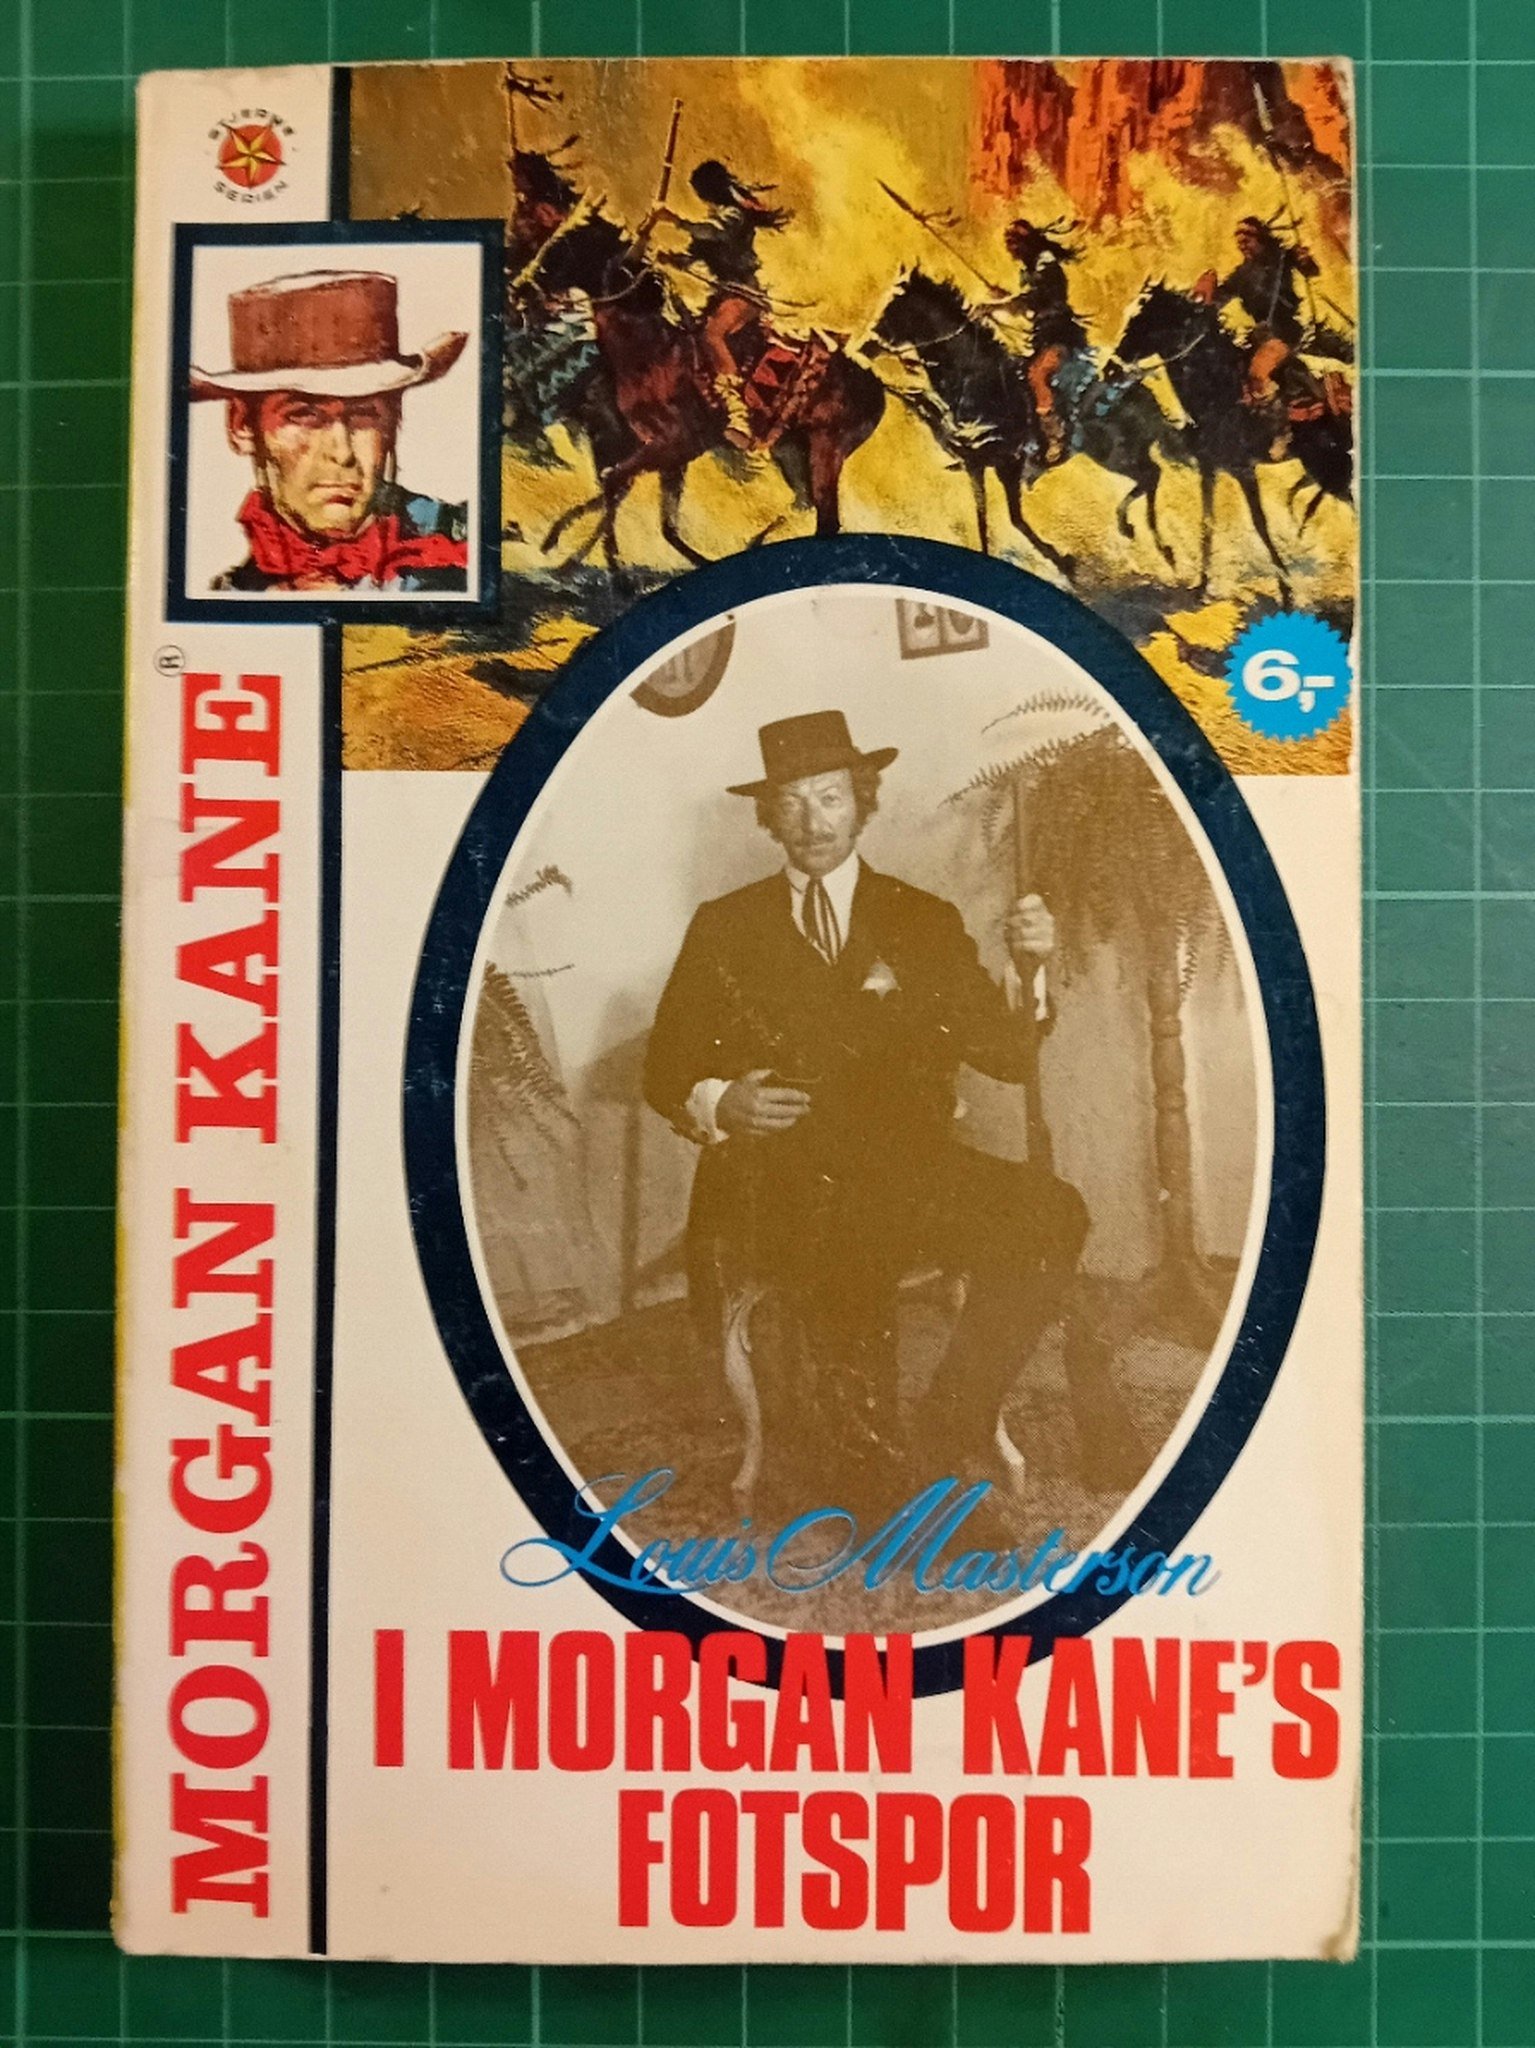 Morgan Kane pocket 77 I Morgan Kane's fotspor